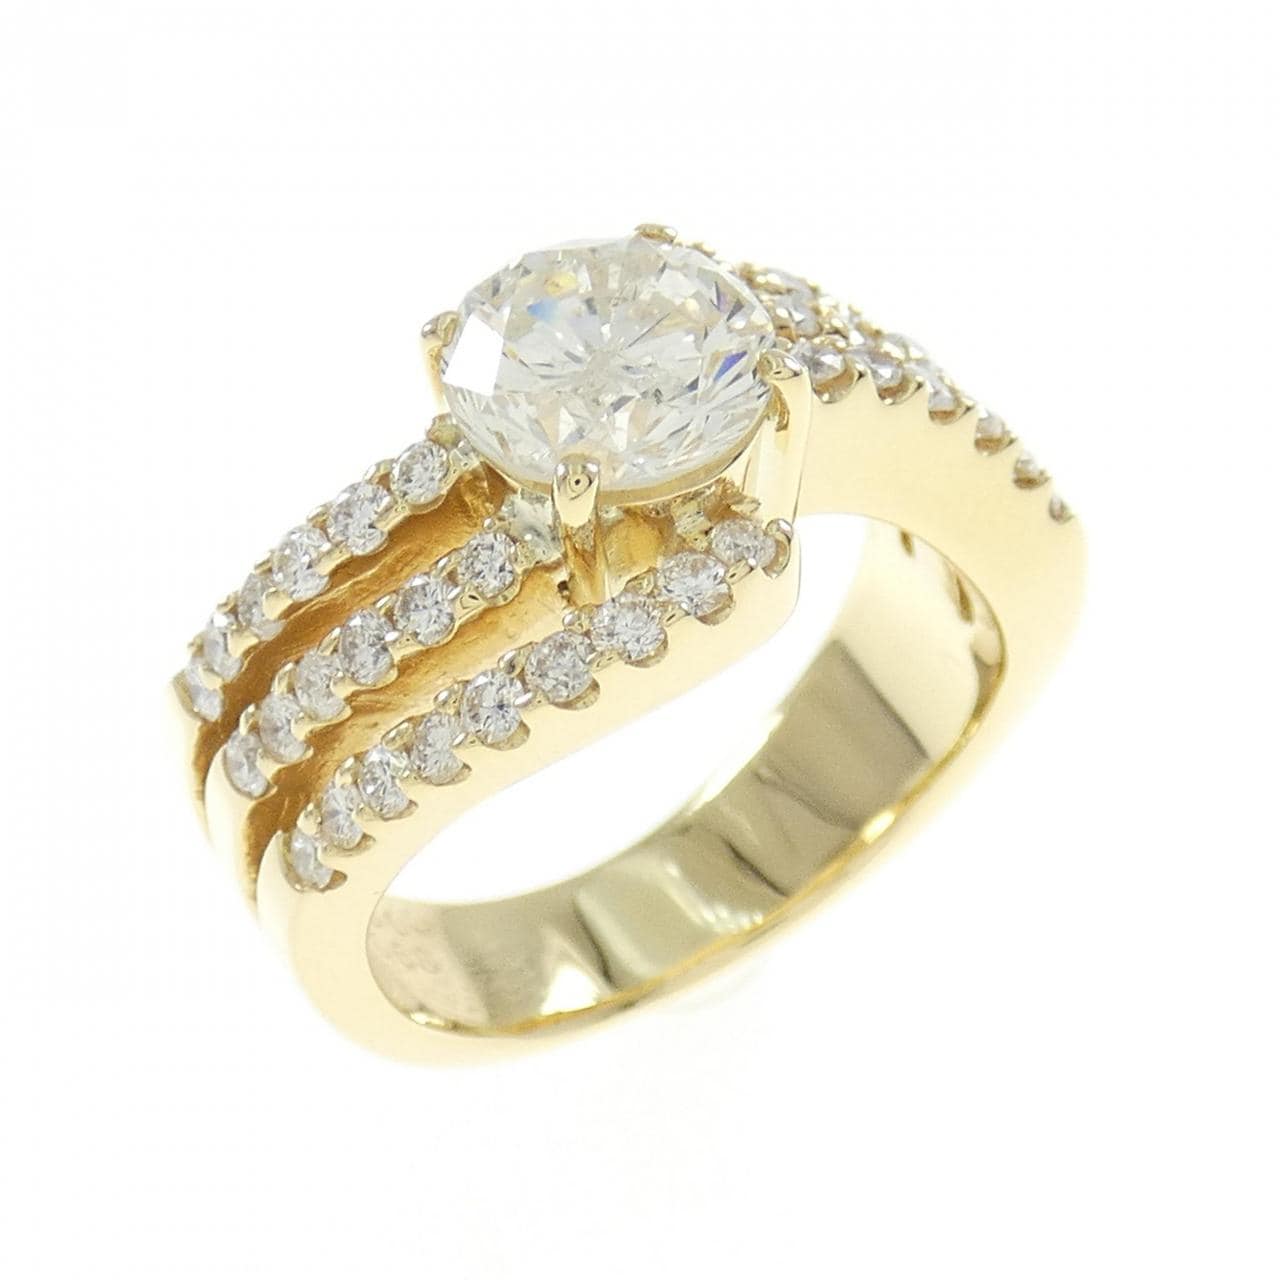 K18YG Diamond Ring 1.509CT K I1 Good